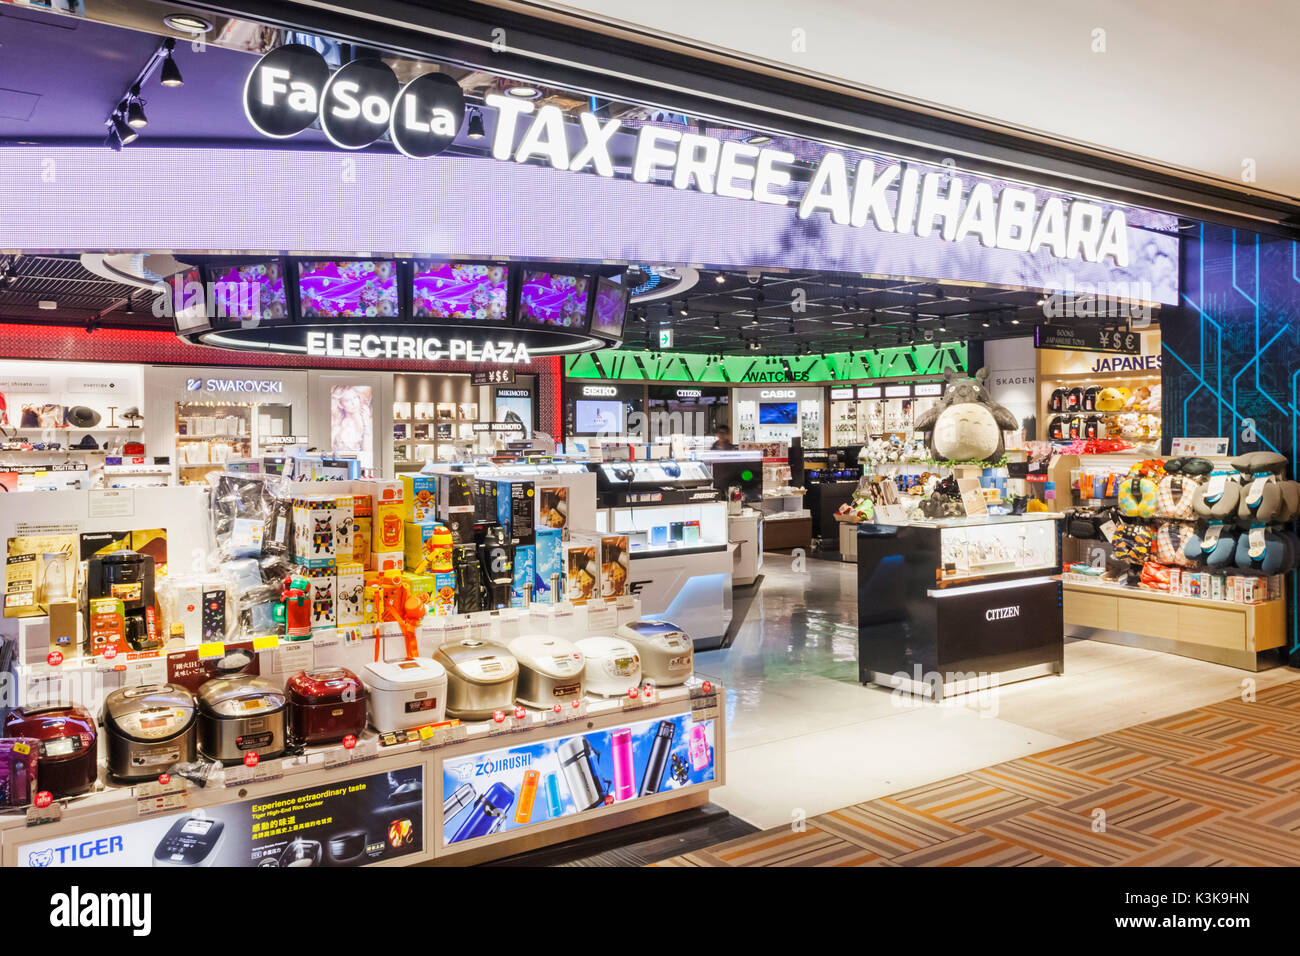 Giappone Hoshu Tokyo Akihabara Tax Free Shop Ingresso Foto Stock Alamy